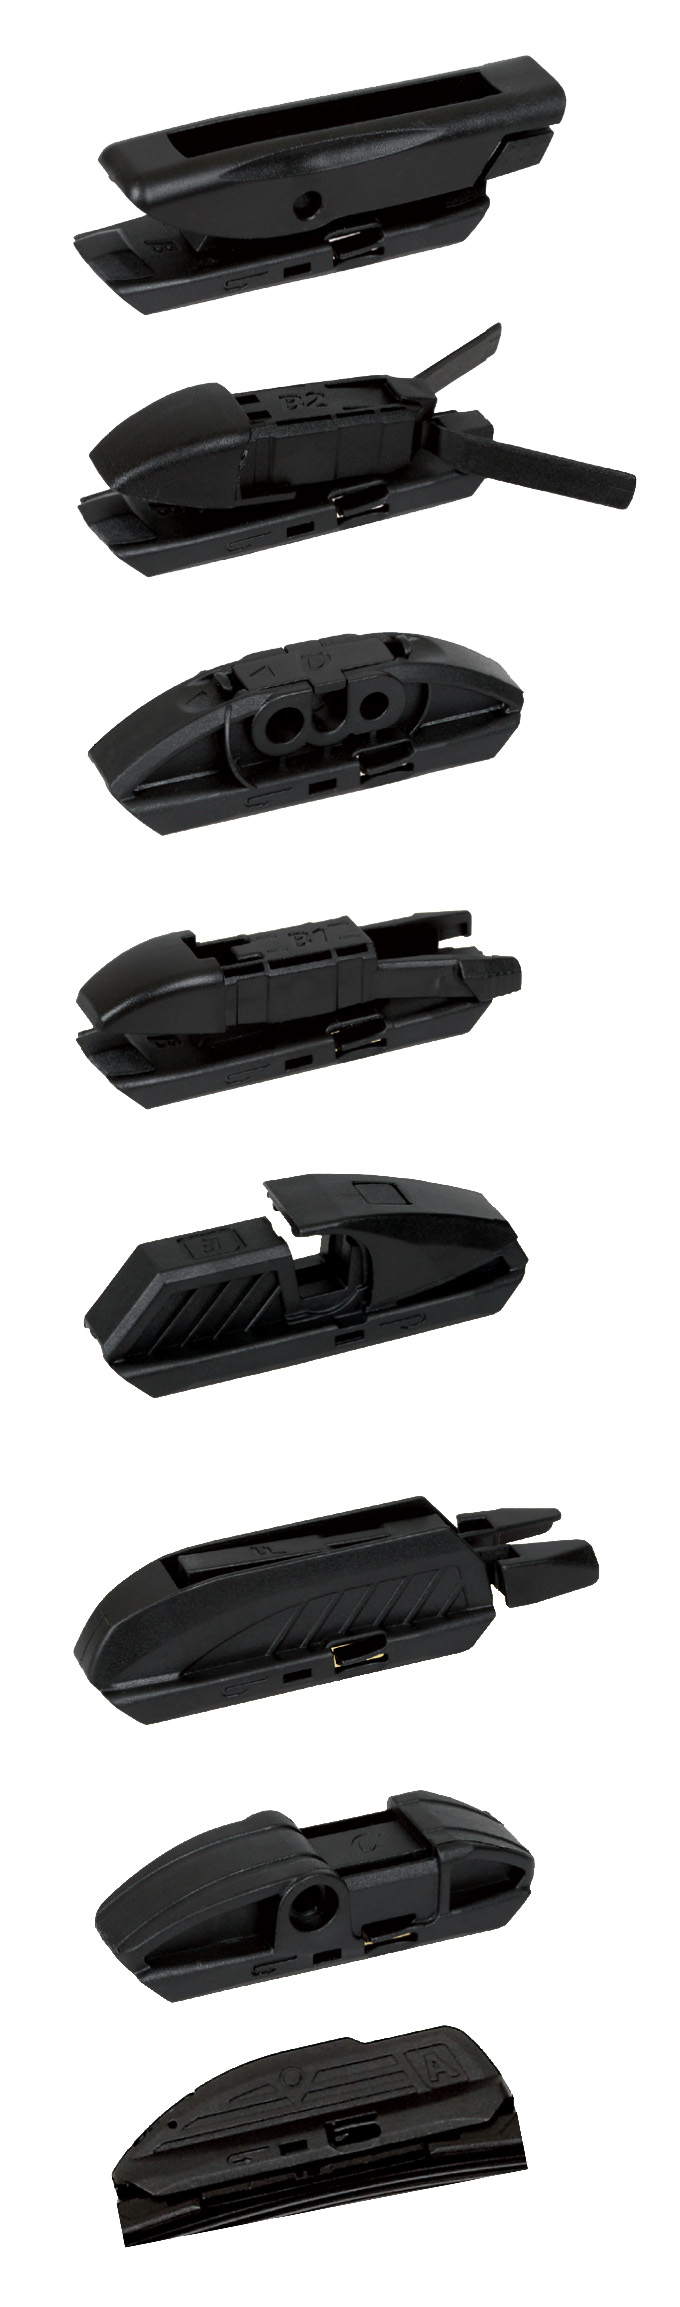 Filson wiper blade 8 adaptors 53 cm (21“) - 1 pcs thumb